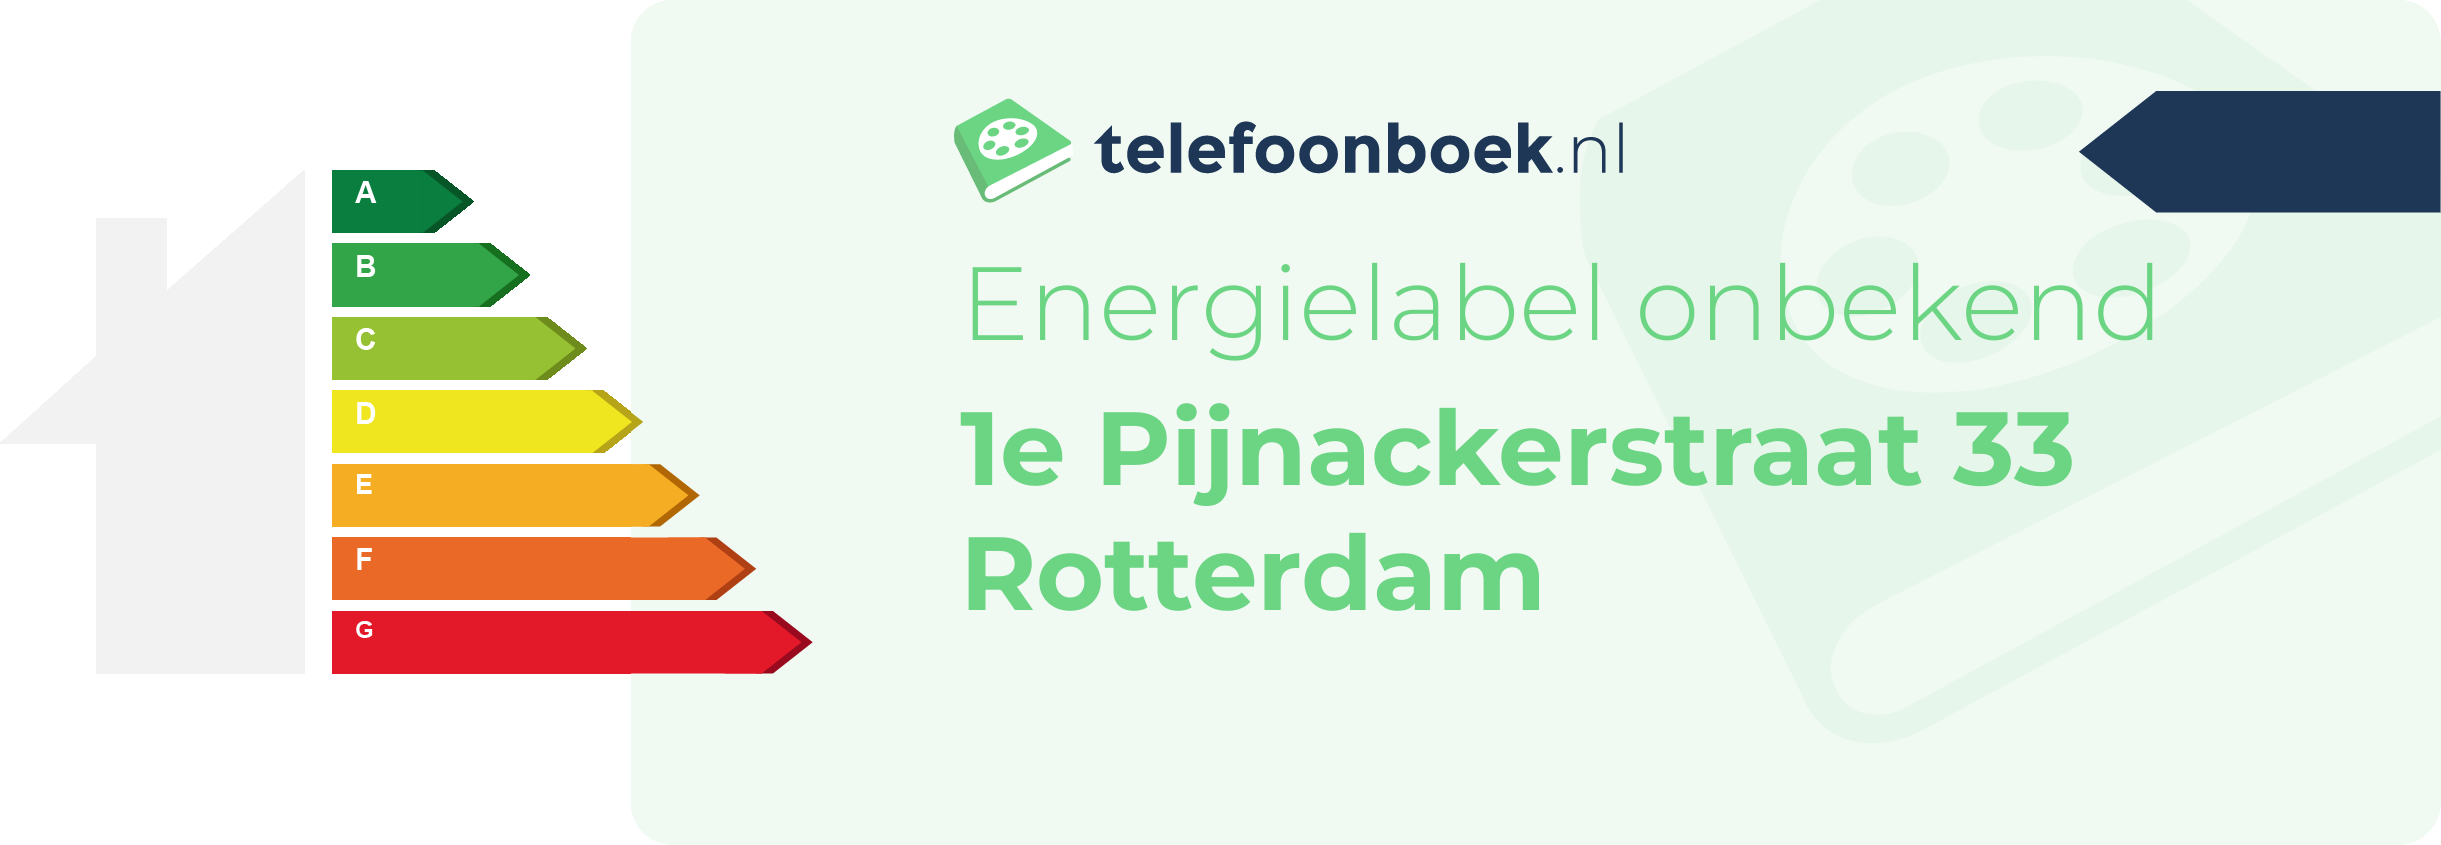 Energielabel 1e Pijnackerstraat 33 Rotterdam